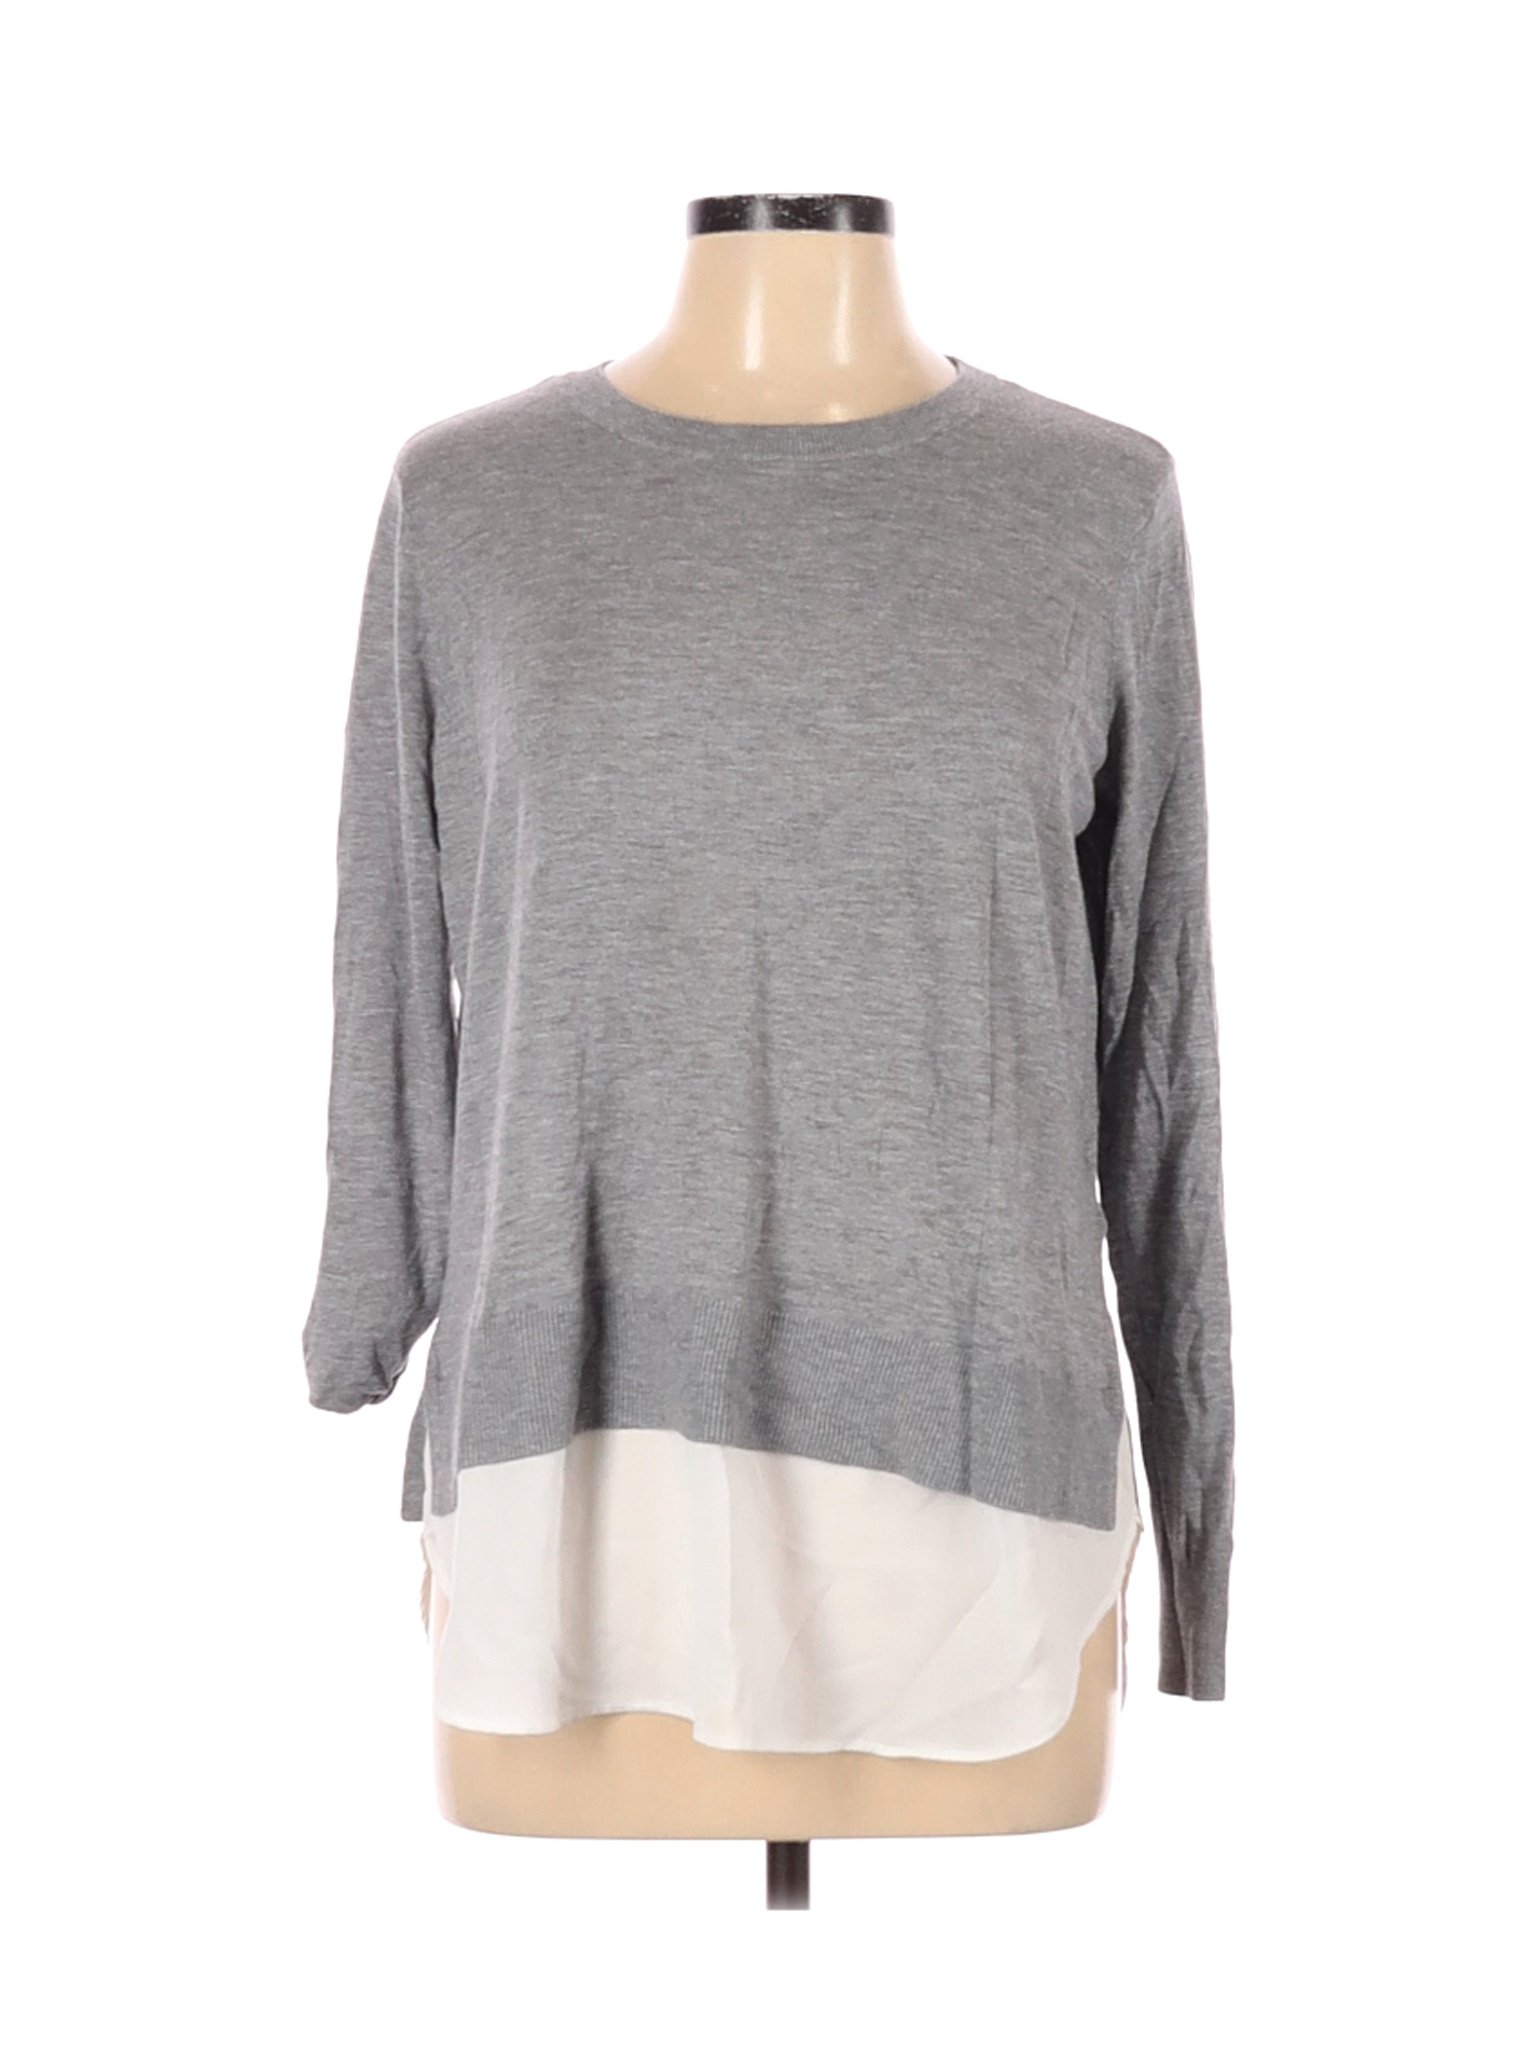 H&M Women Gray Long Sleeve Top L | eBay